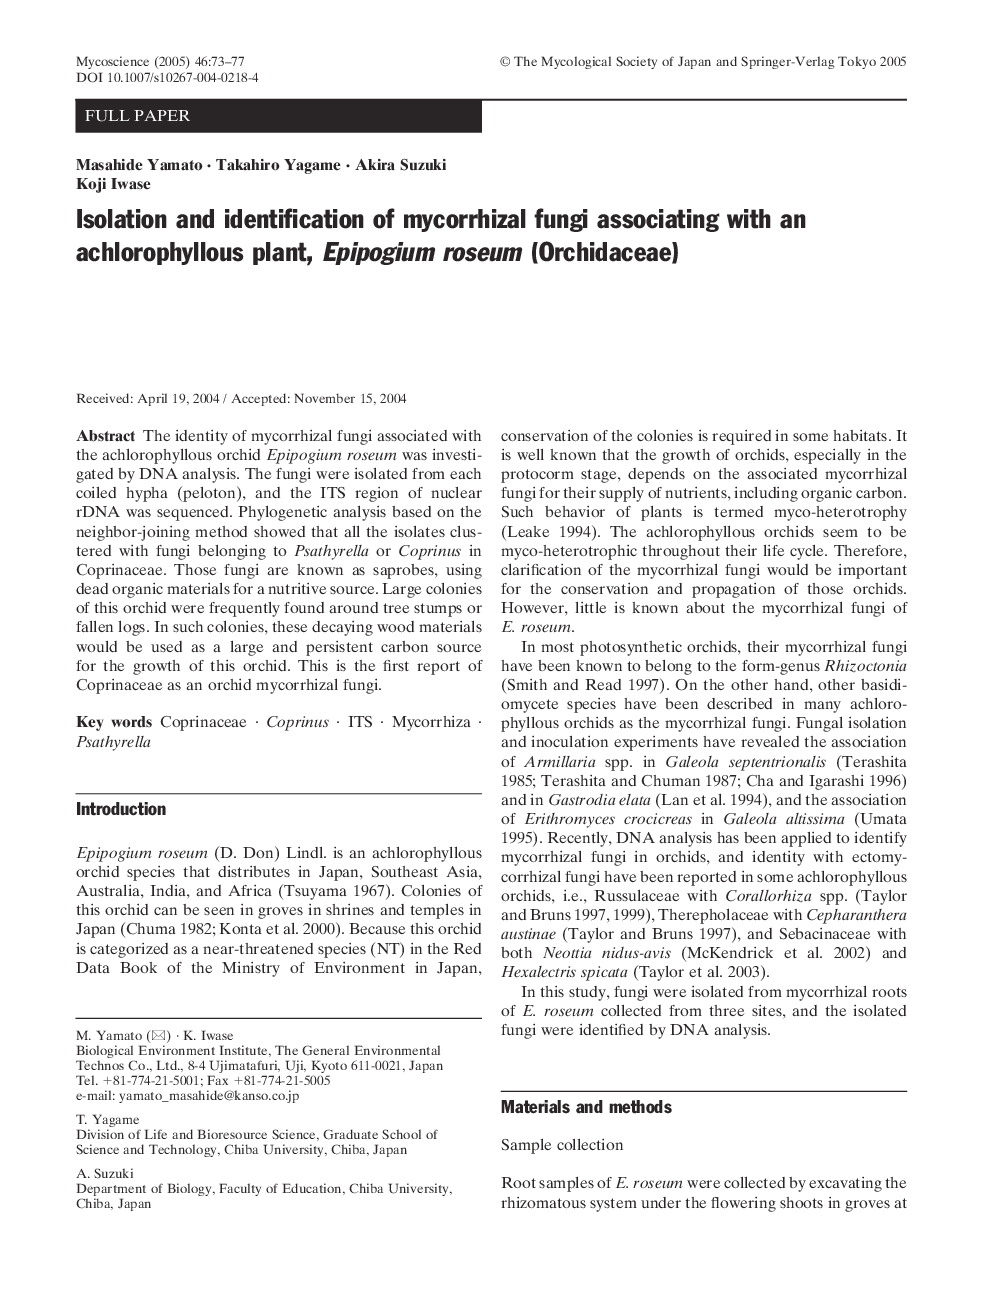 Isolation and identification of mycorrhizal fungi associating with an achlorophyllous plant, Epipogium roseum (Orchidaceae)